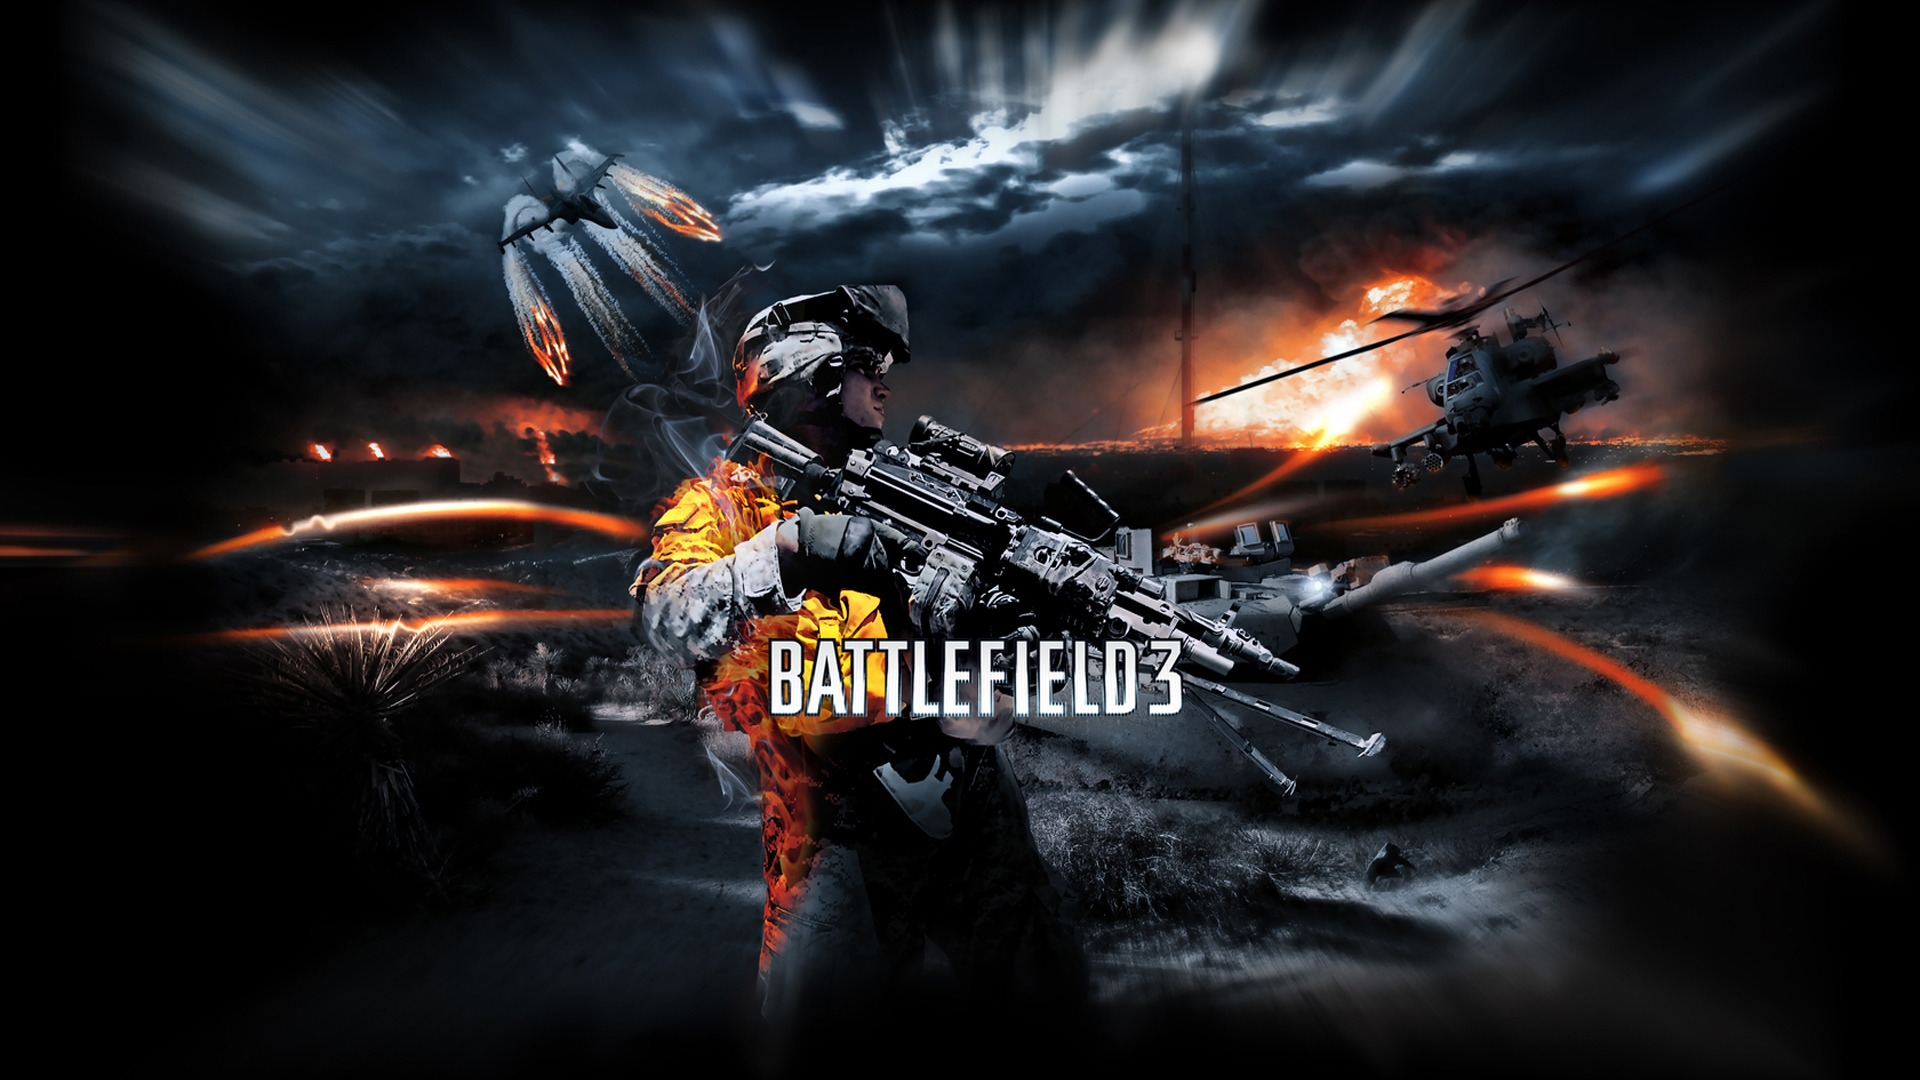 Battlefield 3 Poster for 1920 x 1080 HDTV 1080p resolution